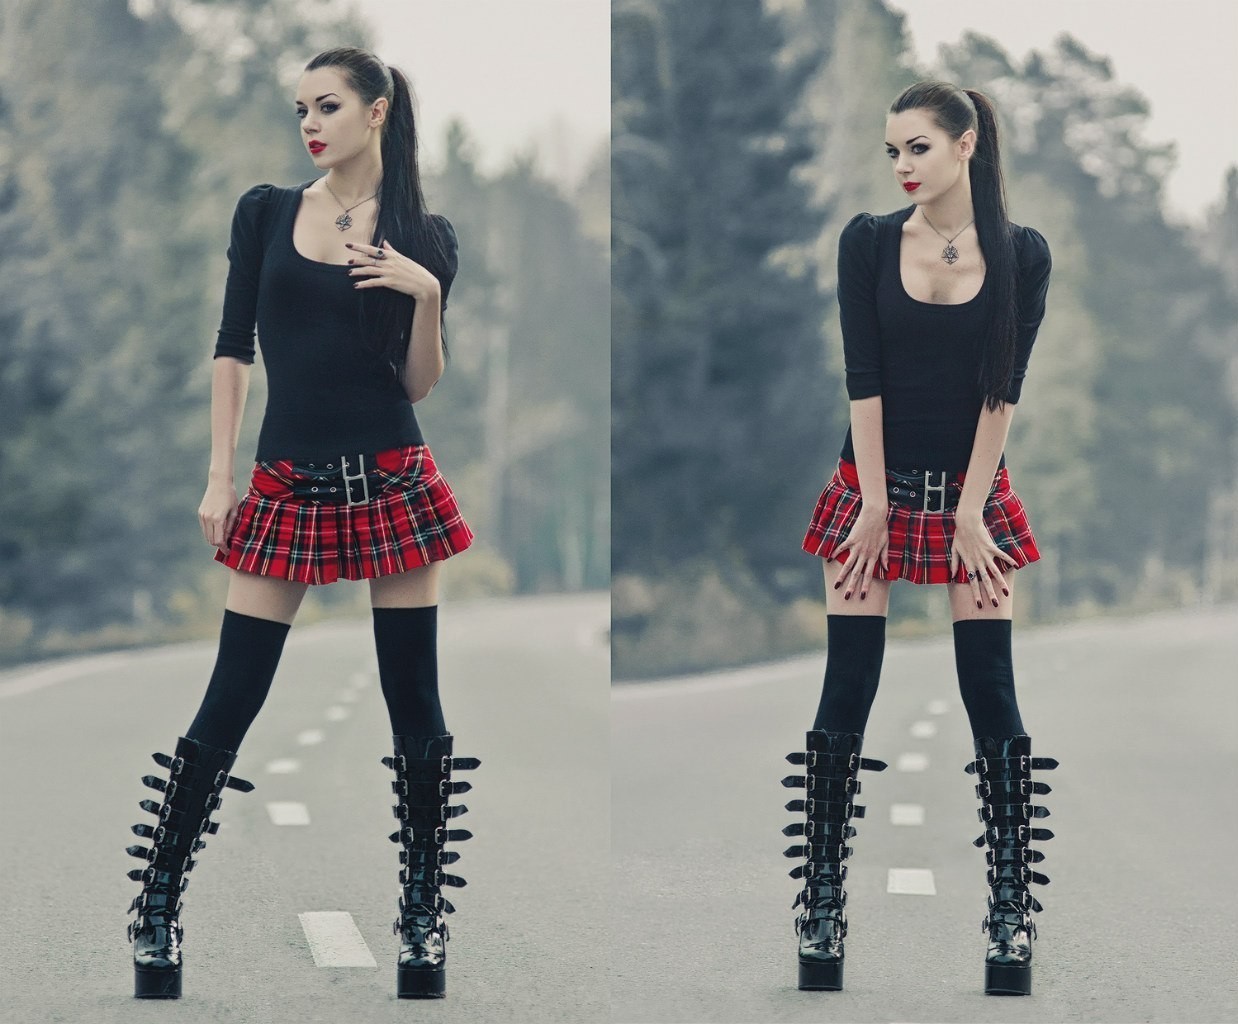 Dark Hair Boots Ponytail Plaid Skirt Goths Alternative Subculture Women 1238x1024